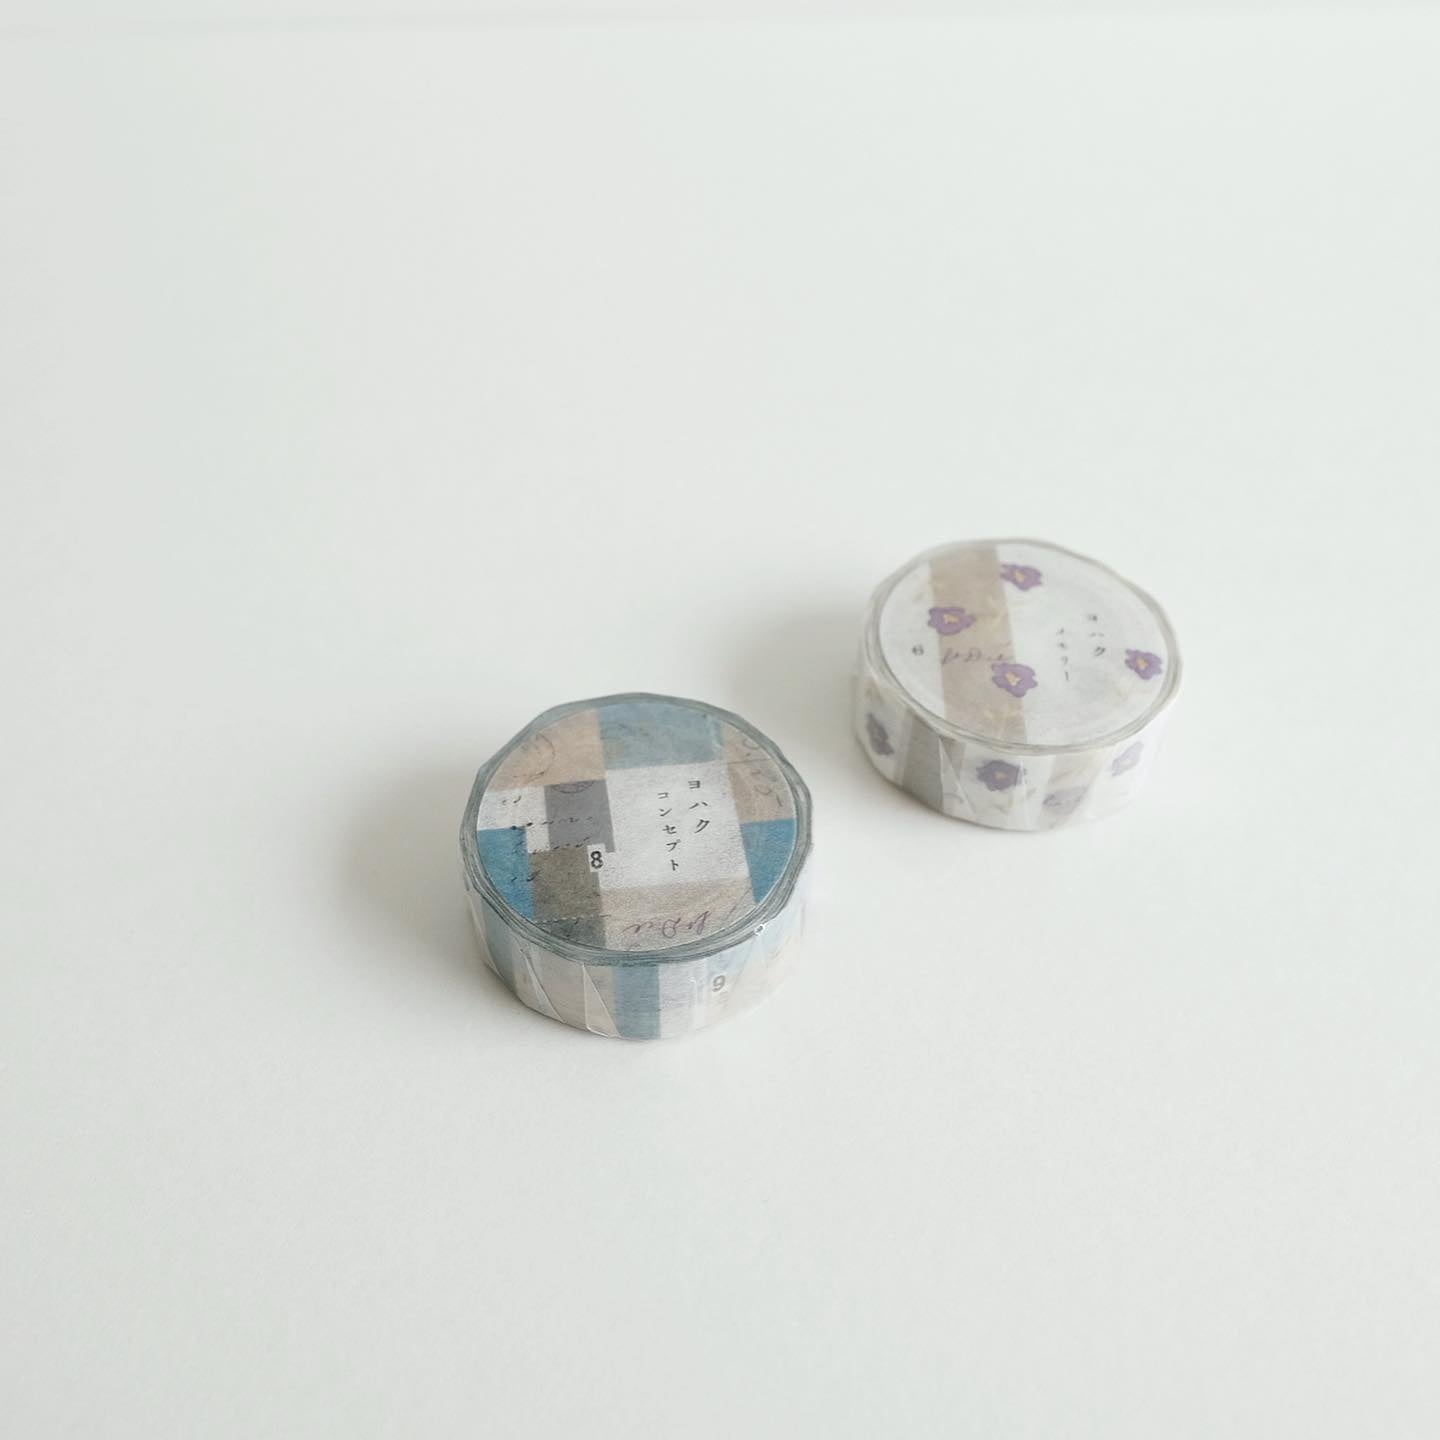 YOHAKU Masking Tape, Limited Collection - Memory(YL-702)